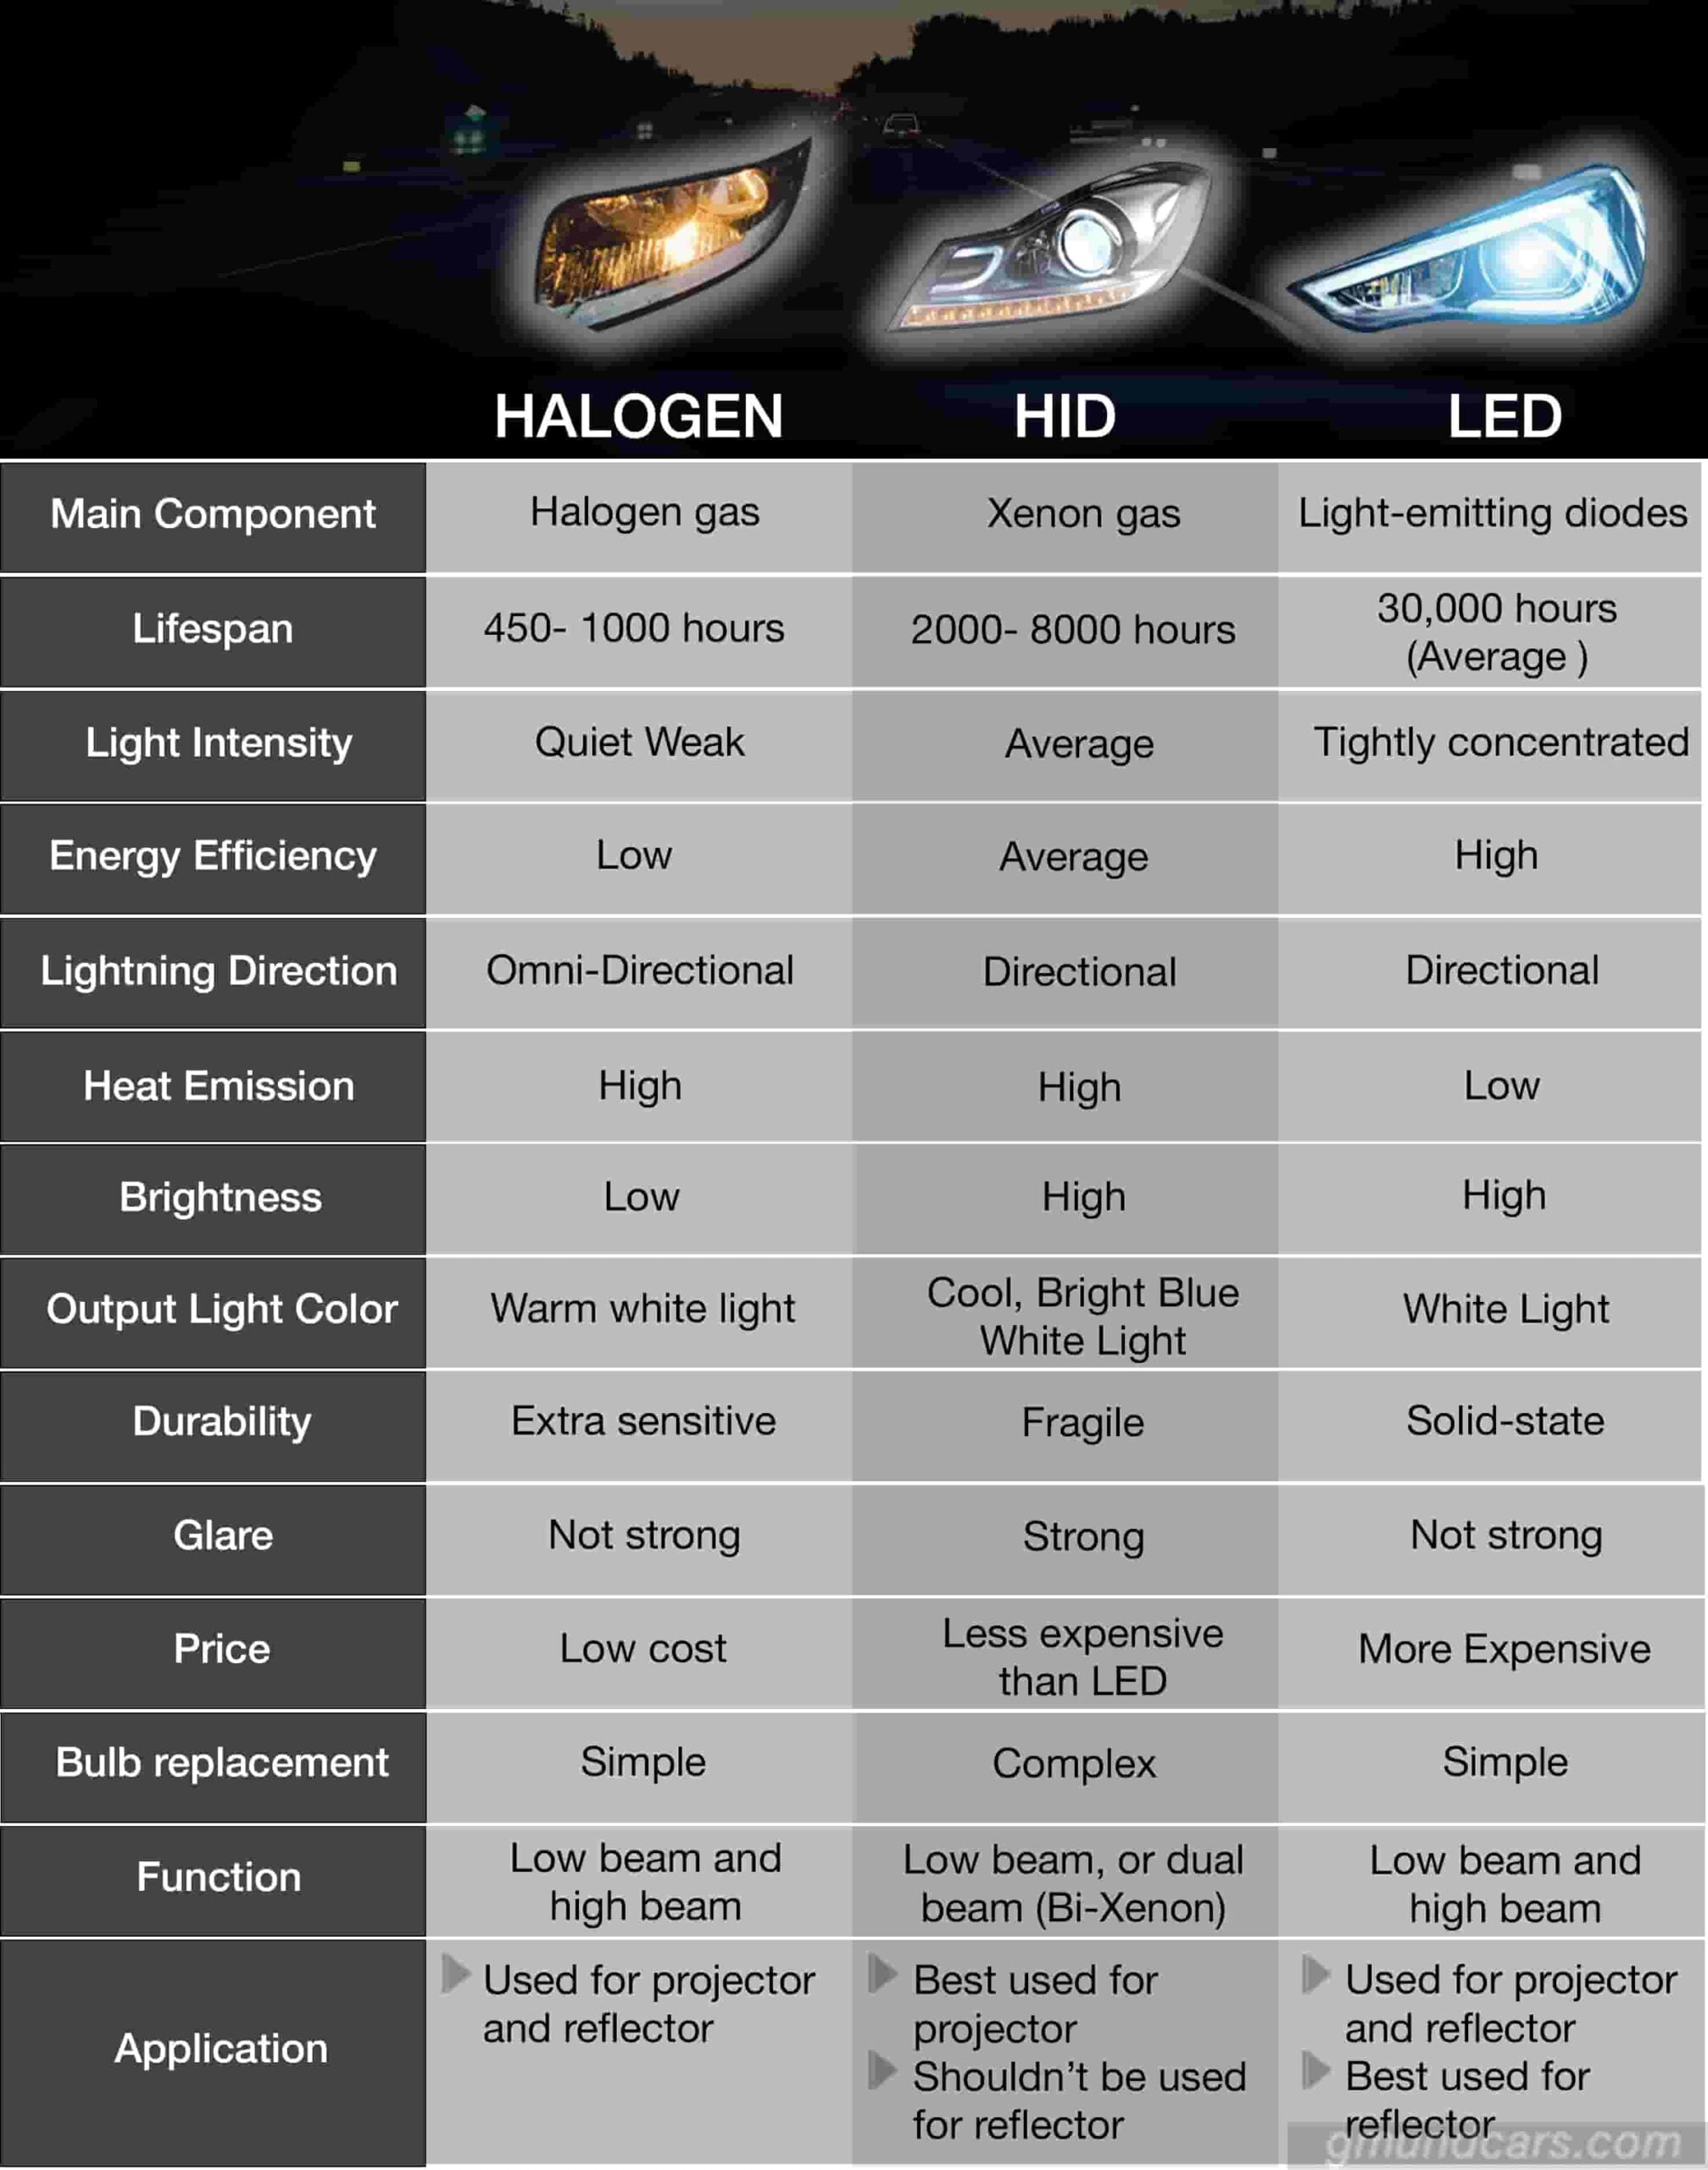 halogen vs hid vs led